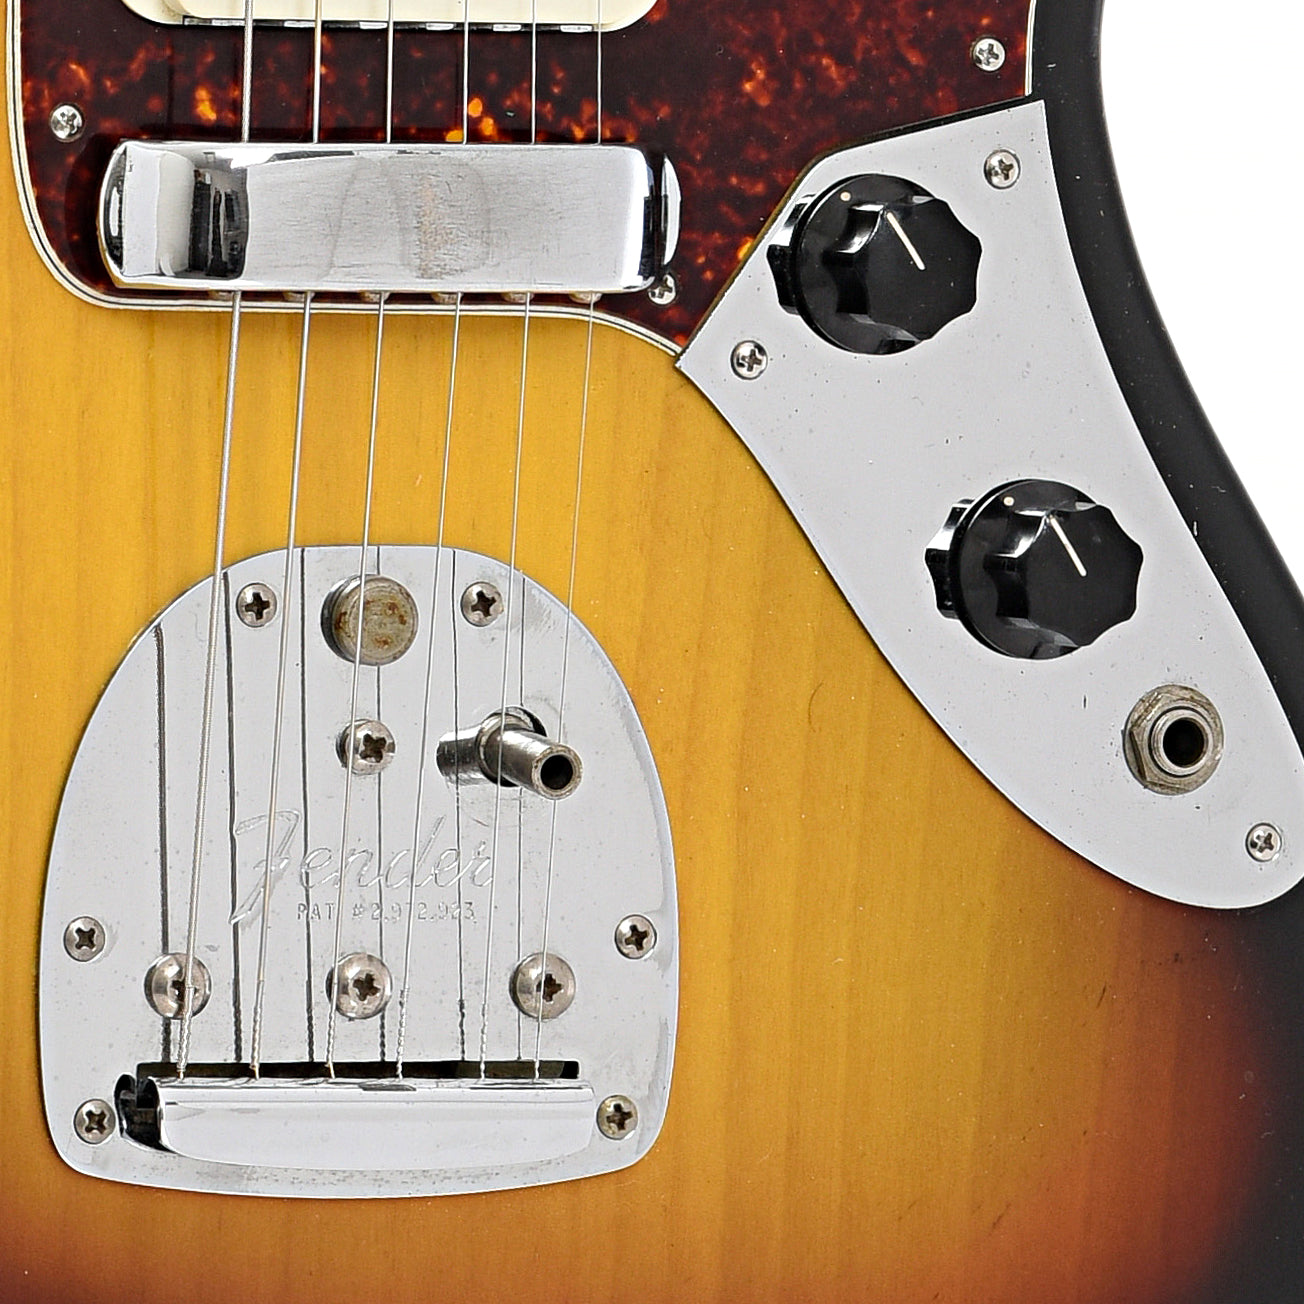 Tailpiece, Bridge  amd controls of Fender Jaguar Electric Guitar (1967)